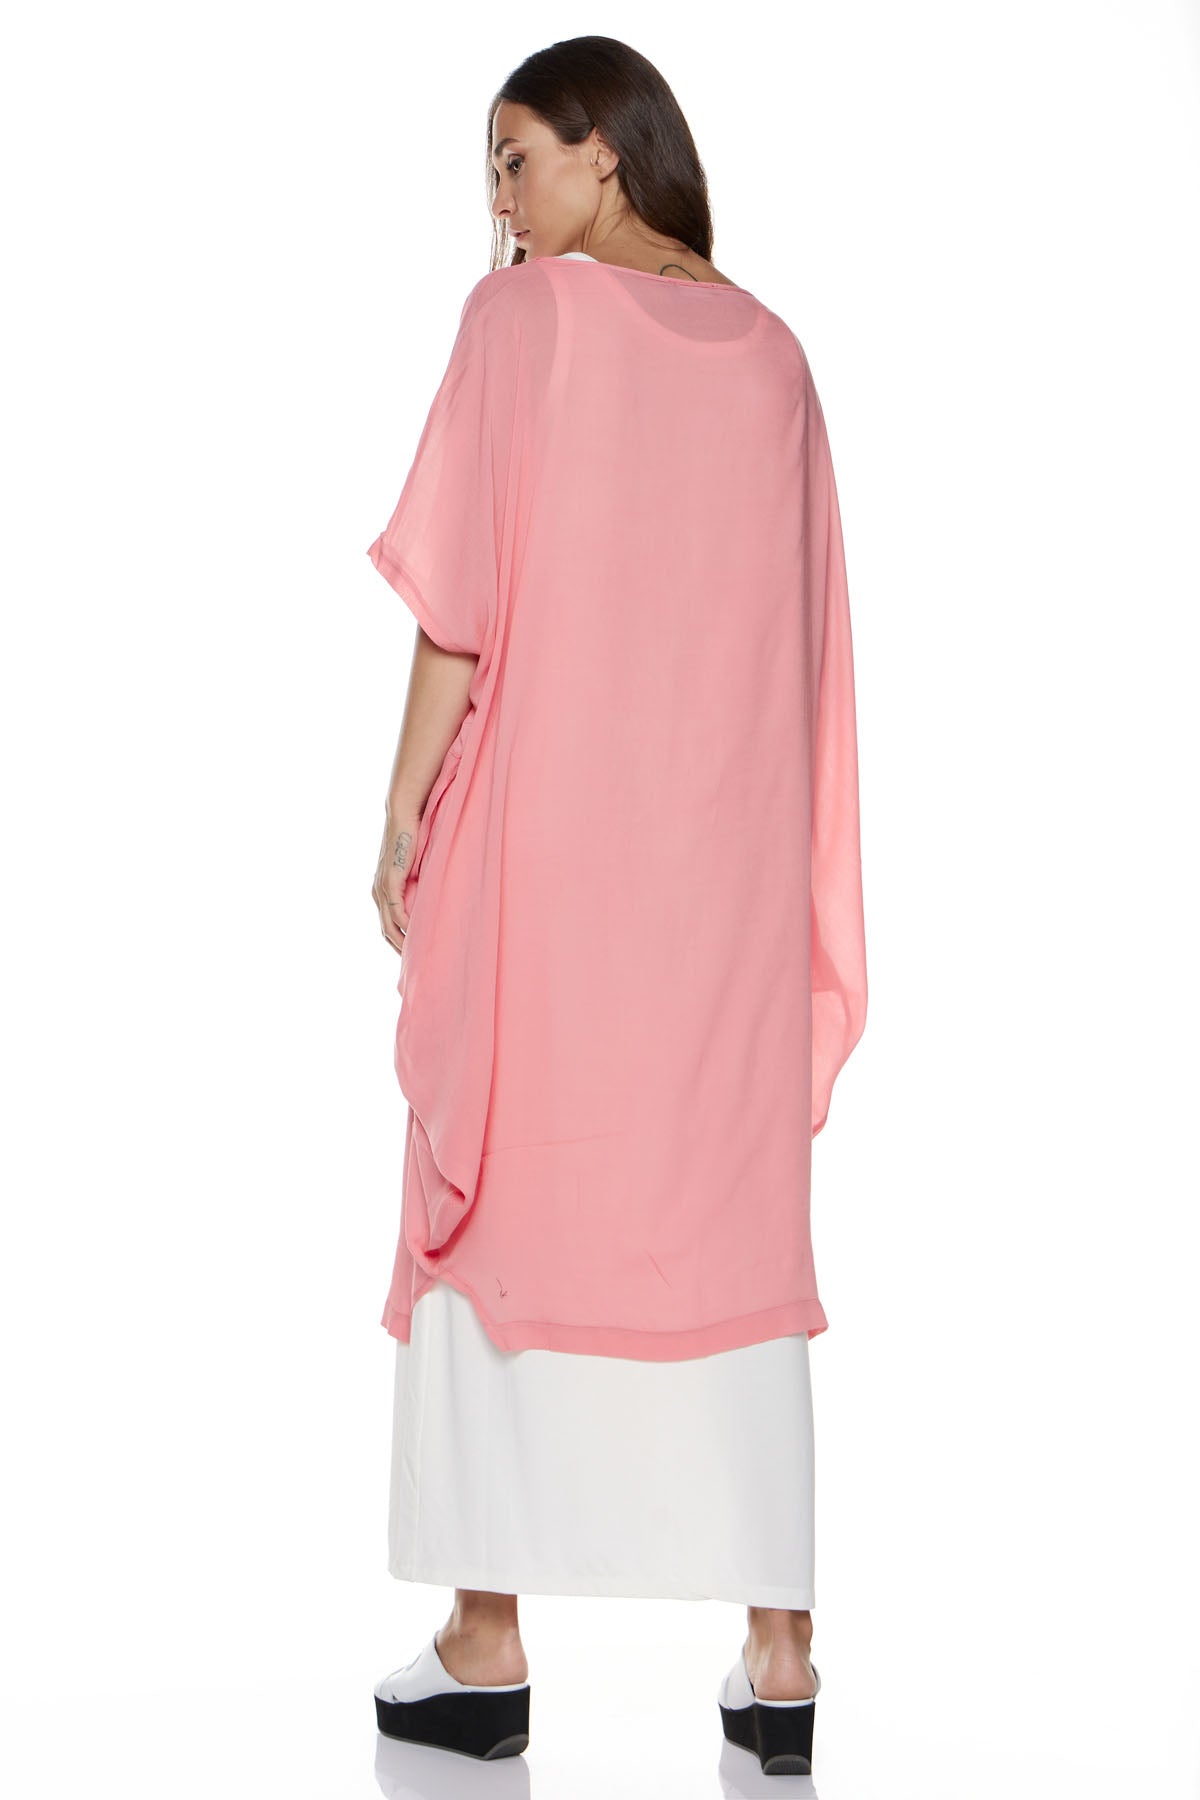 Chic & Simple Συνδυασμός Φόρεμα Κύκλος & Φόρεμα (Basics) Φατιόνα - Ροζ με Λευκό 